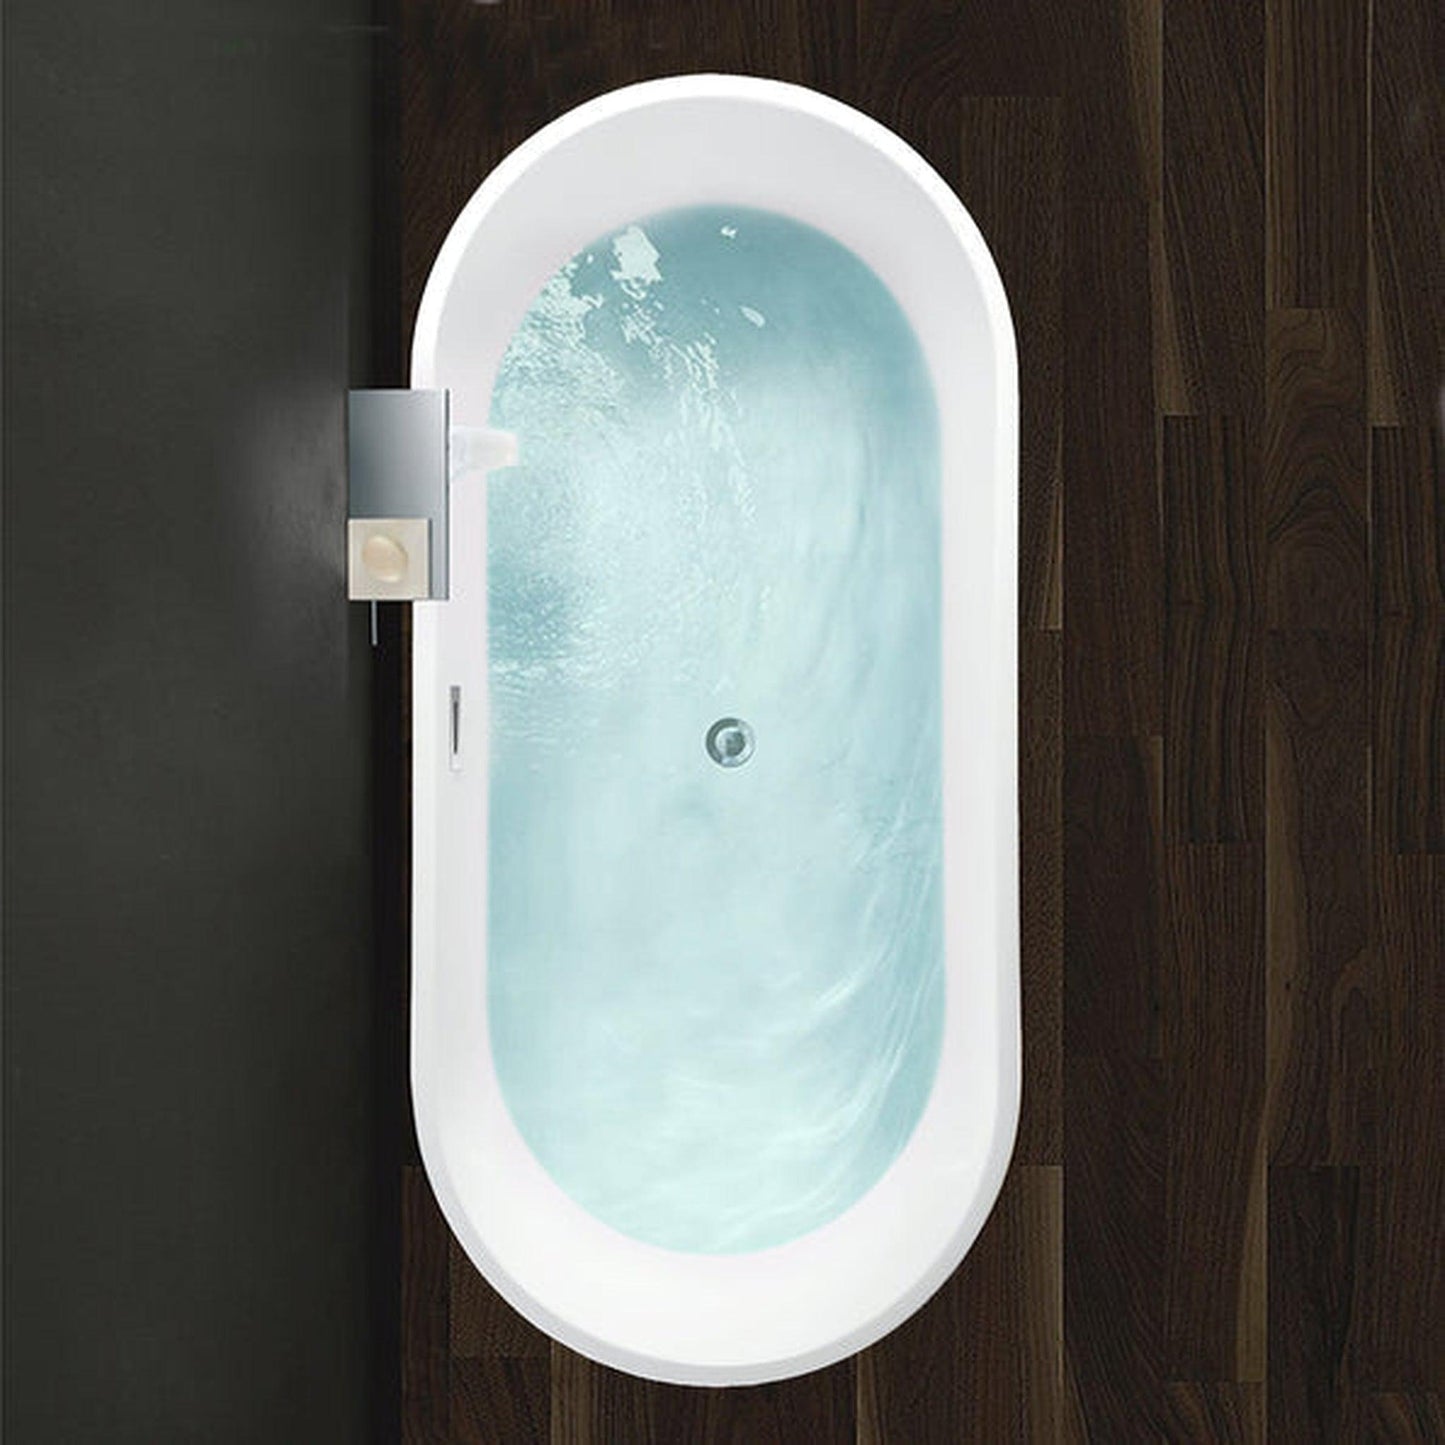 Vanity Art VA6815-S 59" Glossy White Acrylic Freestanding Soaking Tub With Overflow and Pop-up Drain